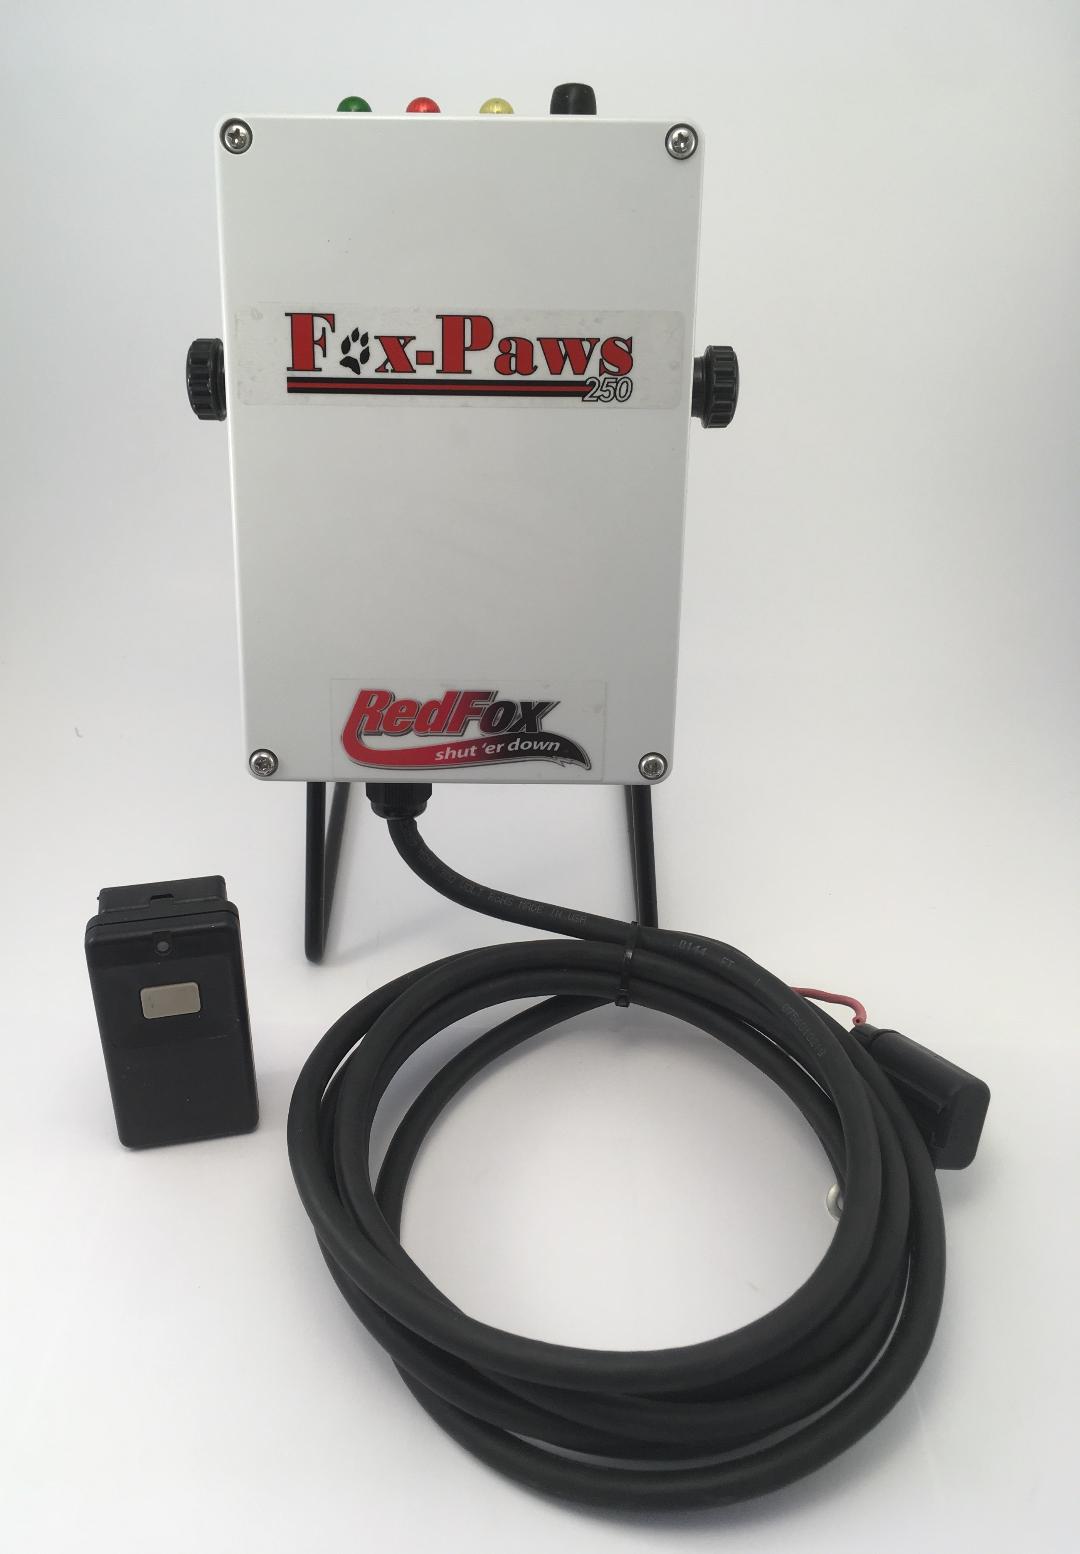 Fox-Paws 250 | Red Fox Enterprises